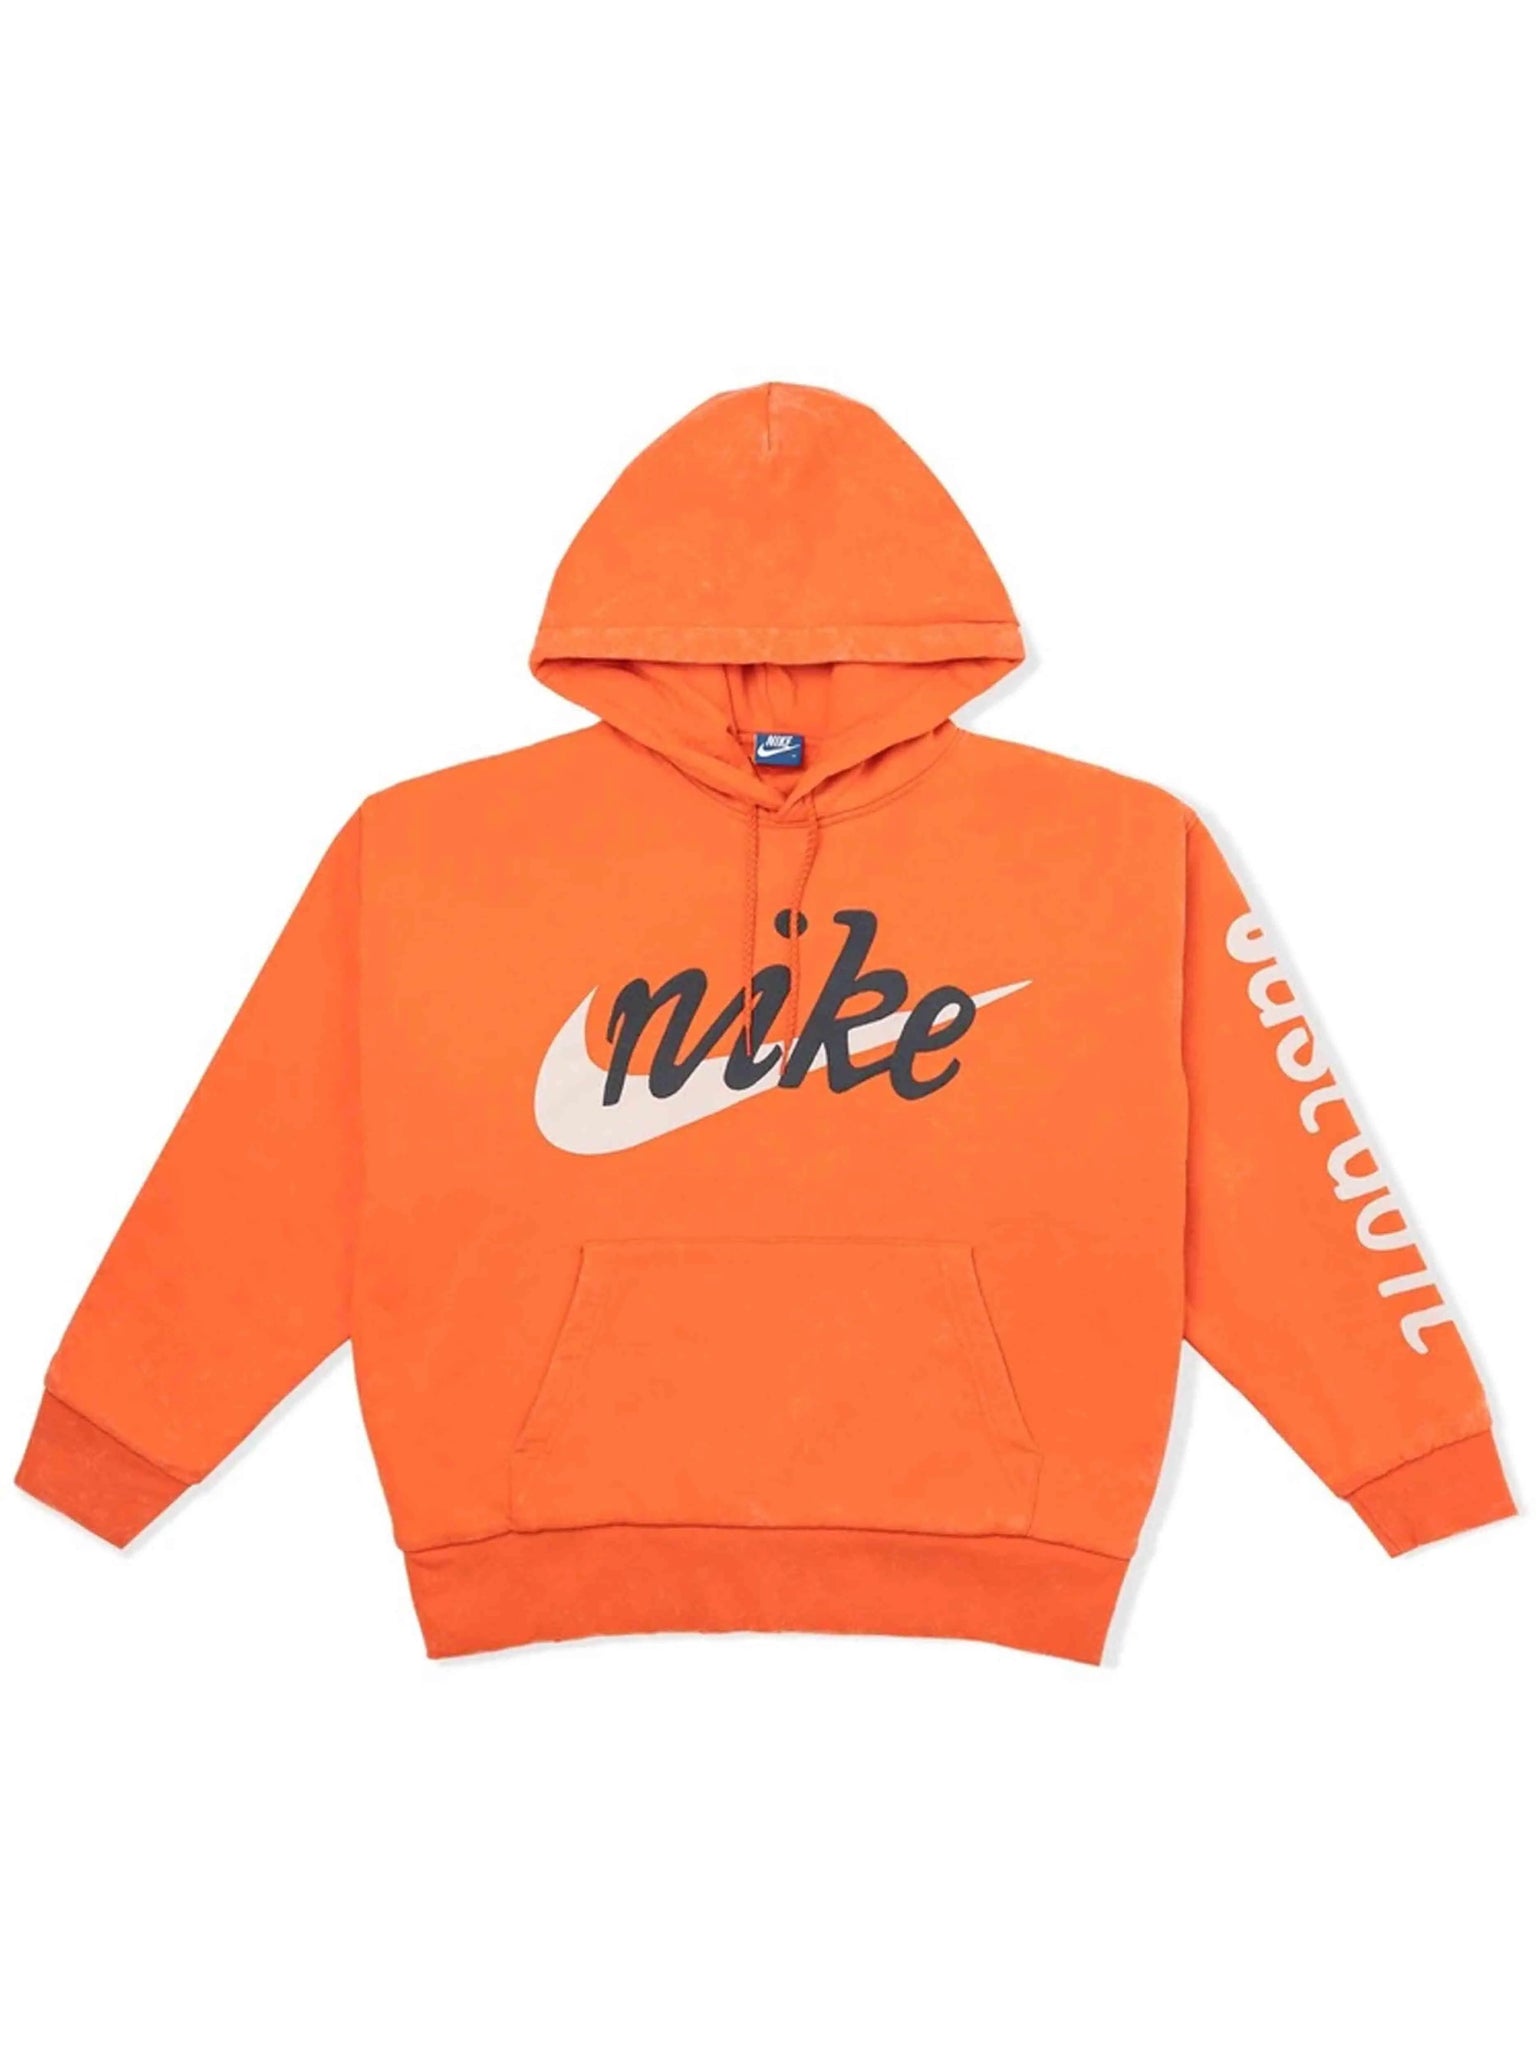 Nike X CPFM Shoebox Heavyweight Hoodie Pullover Orange [SS21] Prior